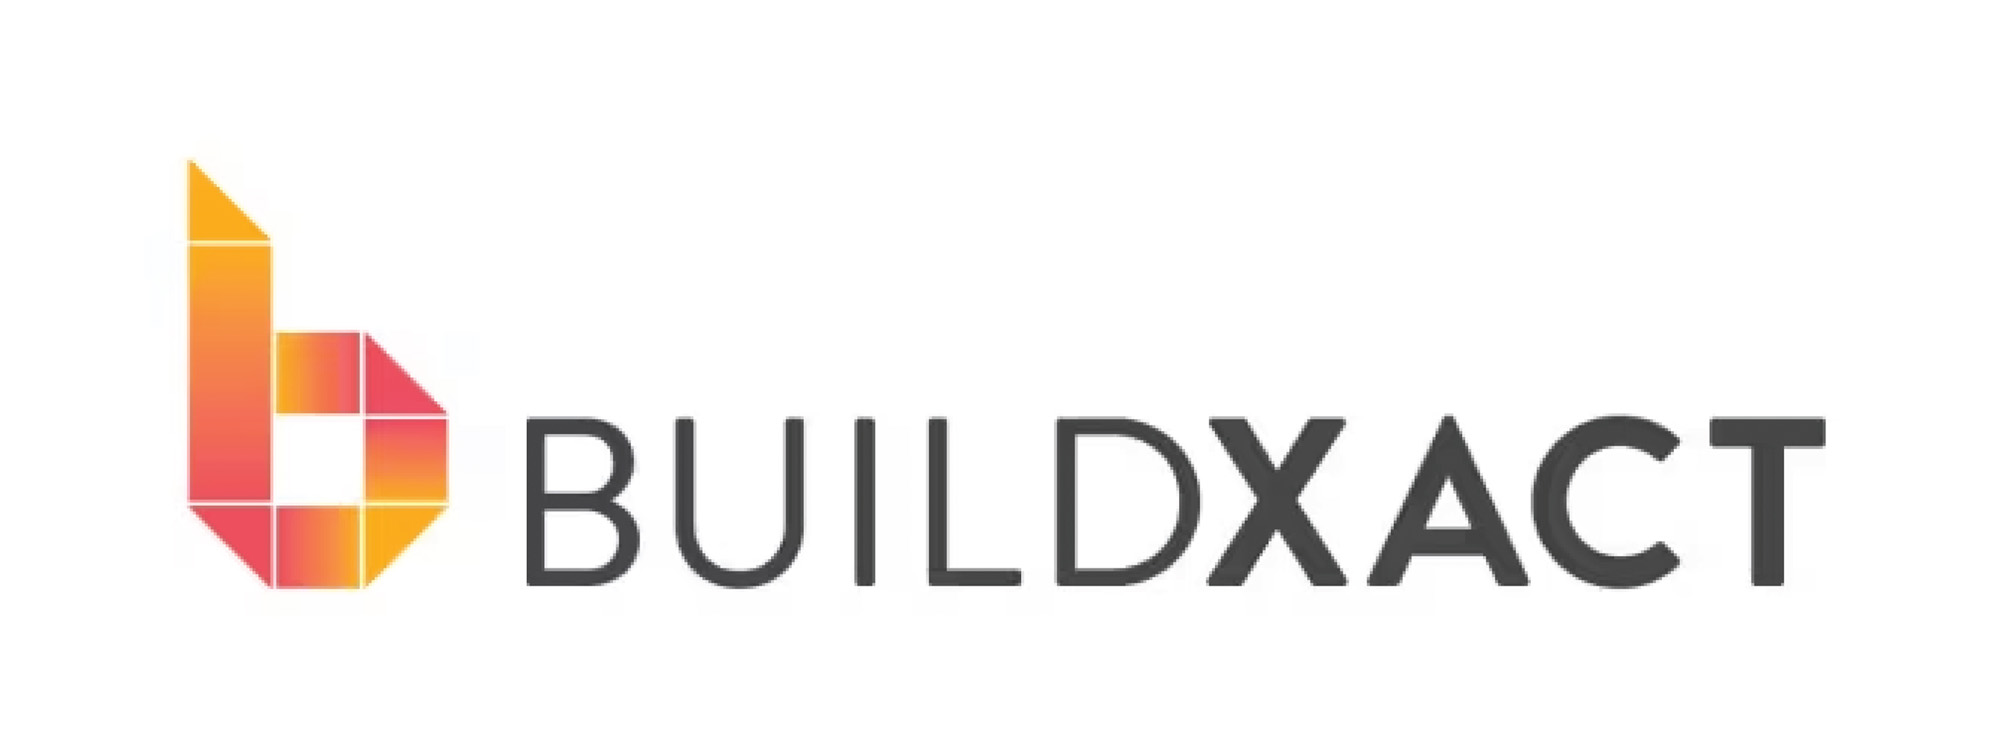 Buildxact Management Platform